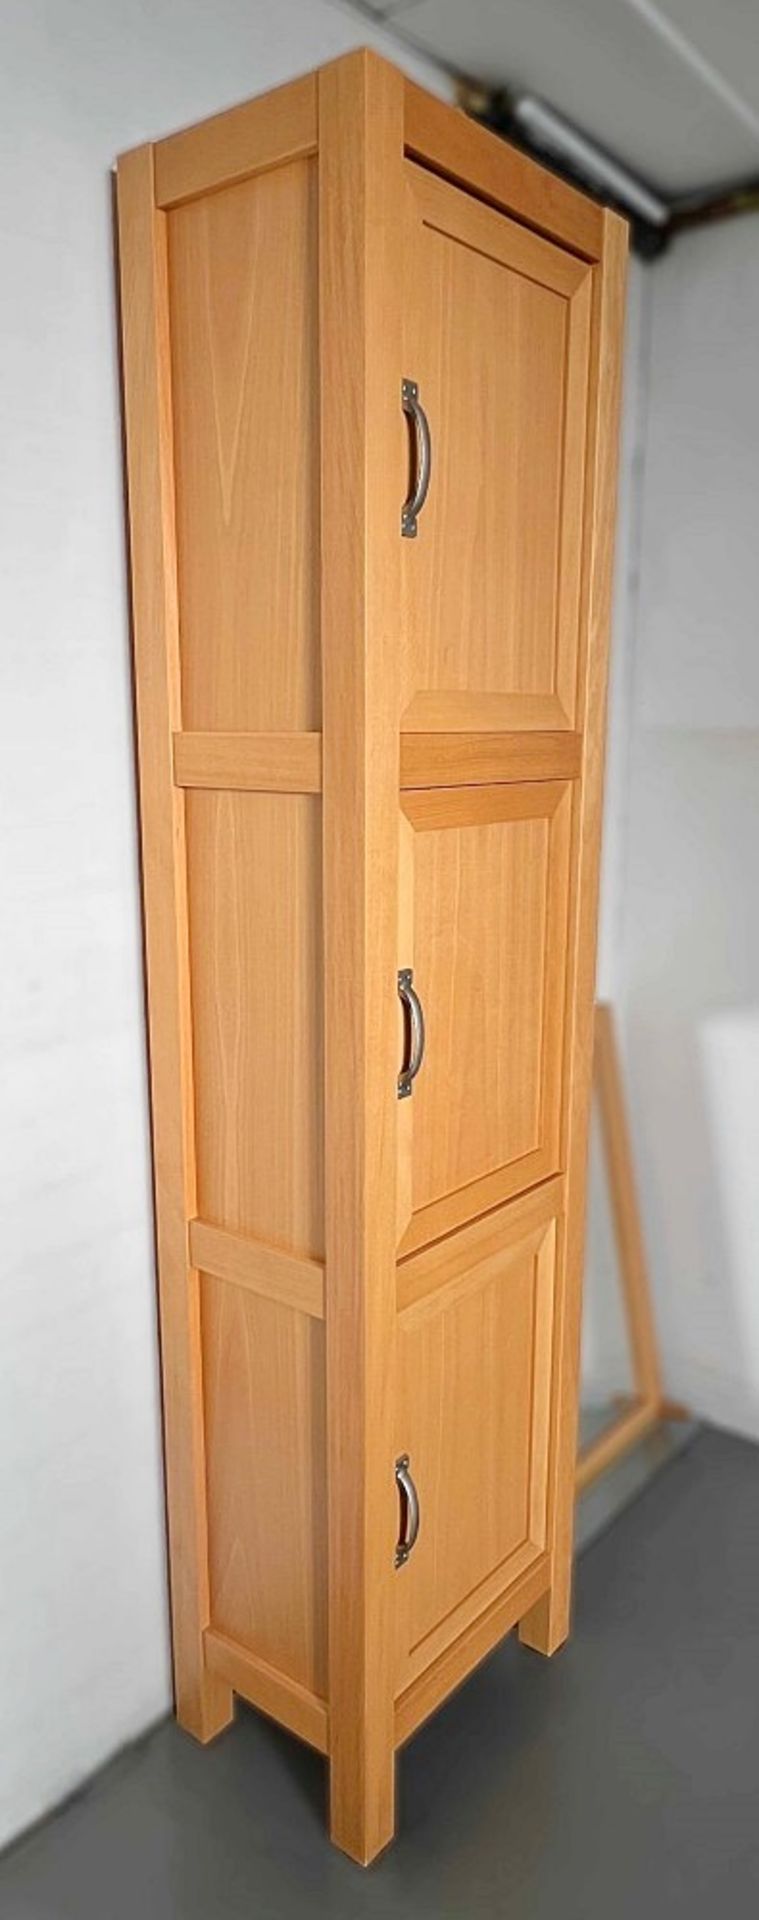 1 x VILLEROY & BOCH 3-Door Tallboy Bathroom Storage Cabinet With Matching Mirror - NO VAT ON THE - Image 3 of 5